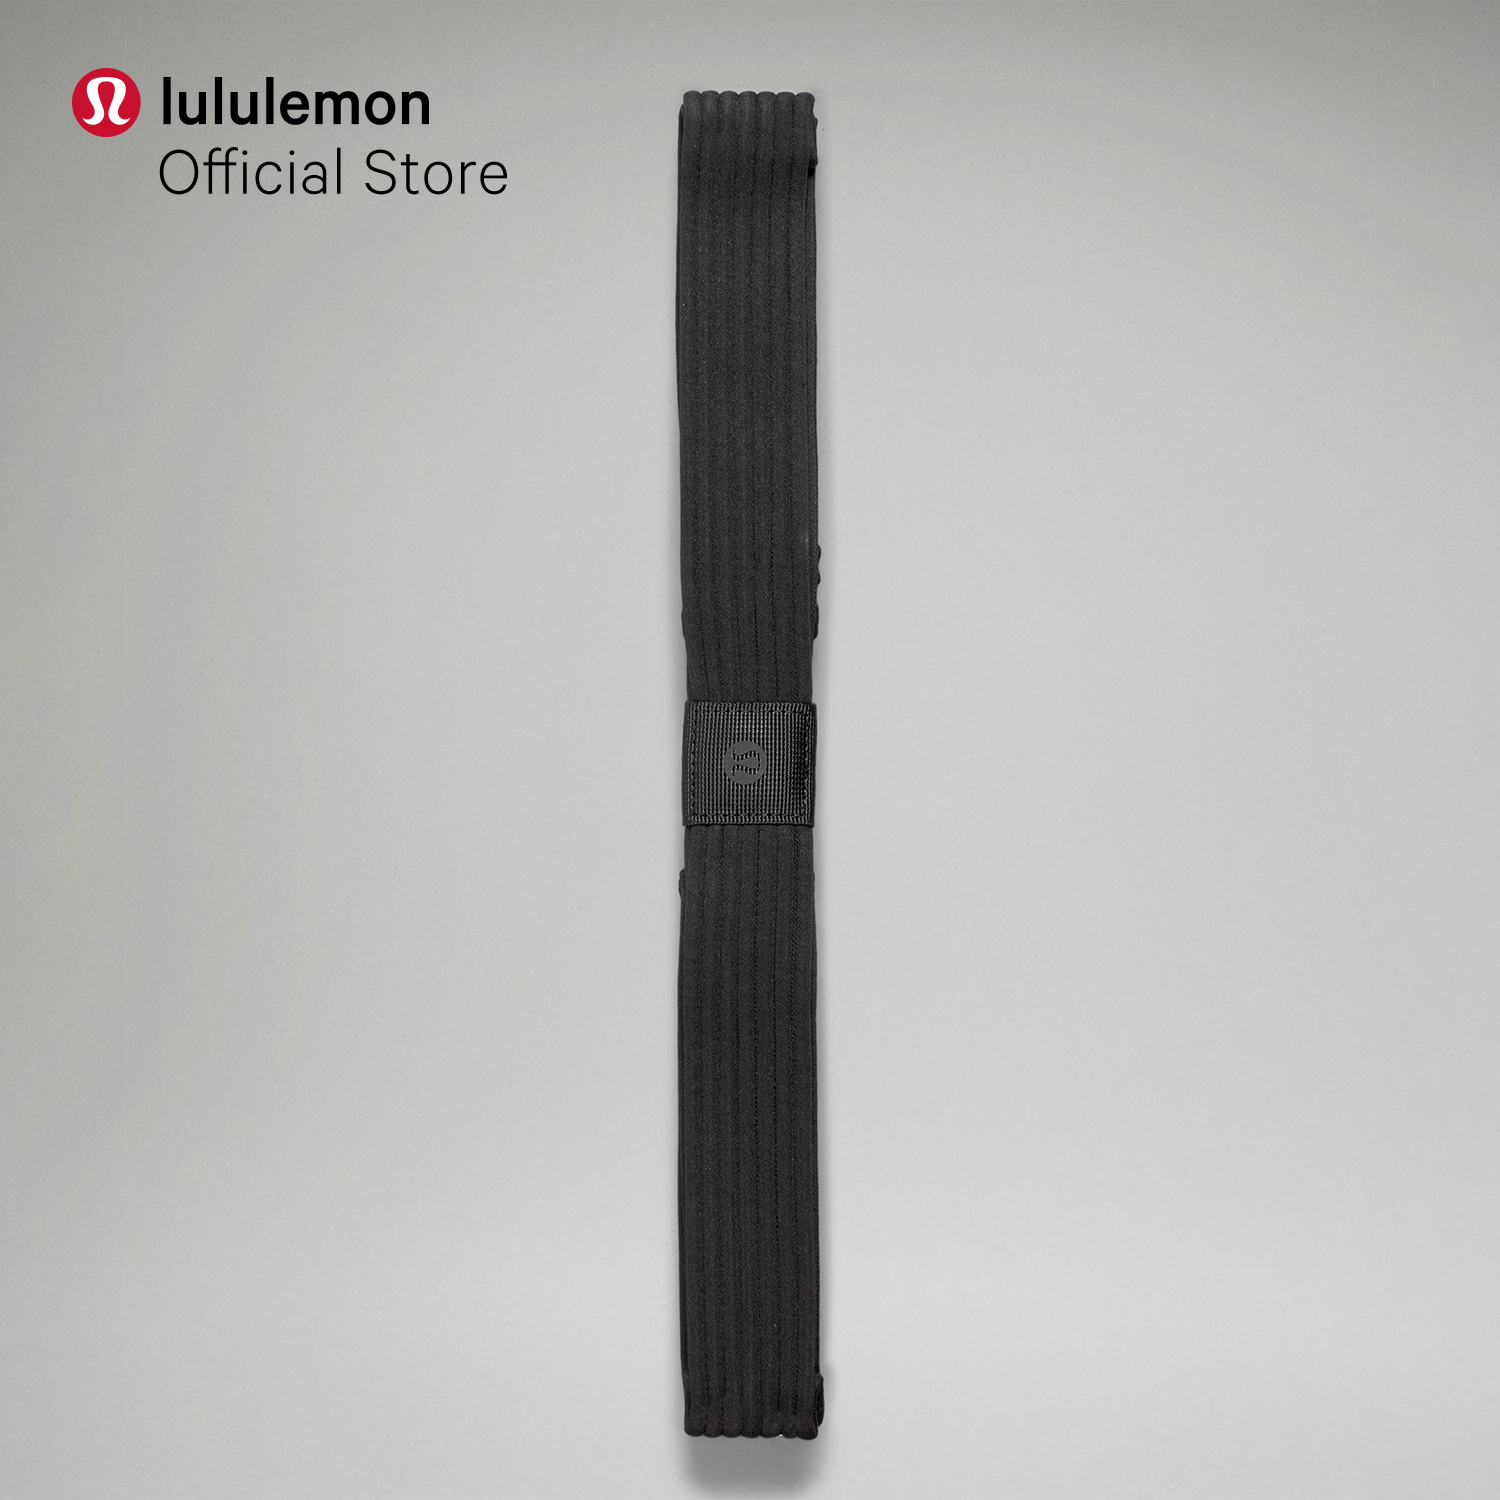 Lululemon Yoga Mat Strap